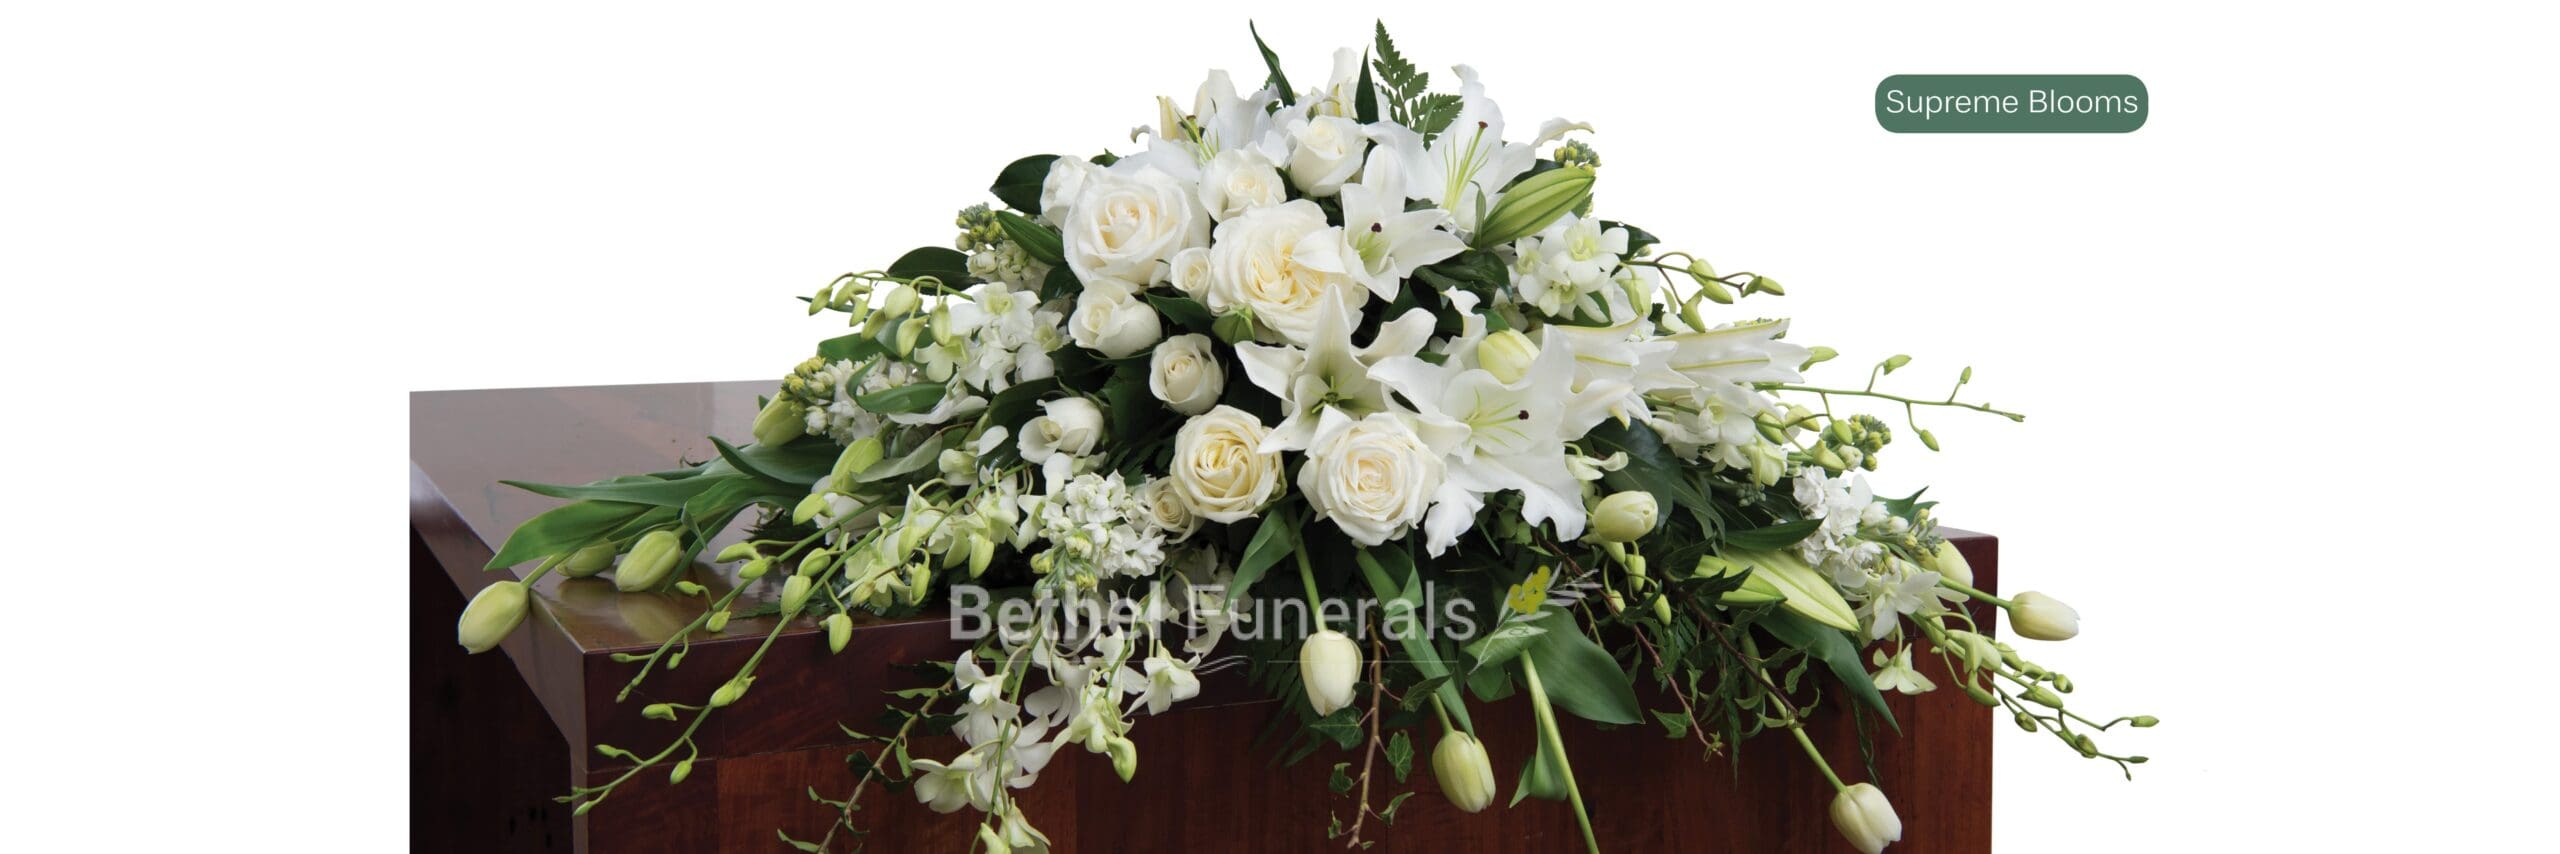 Supreme Blooms funeral flowers